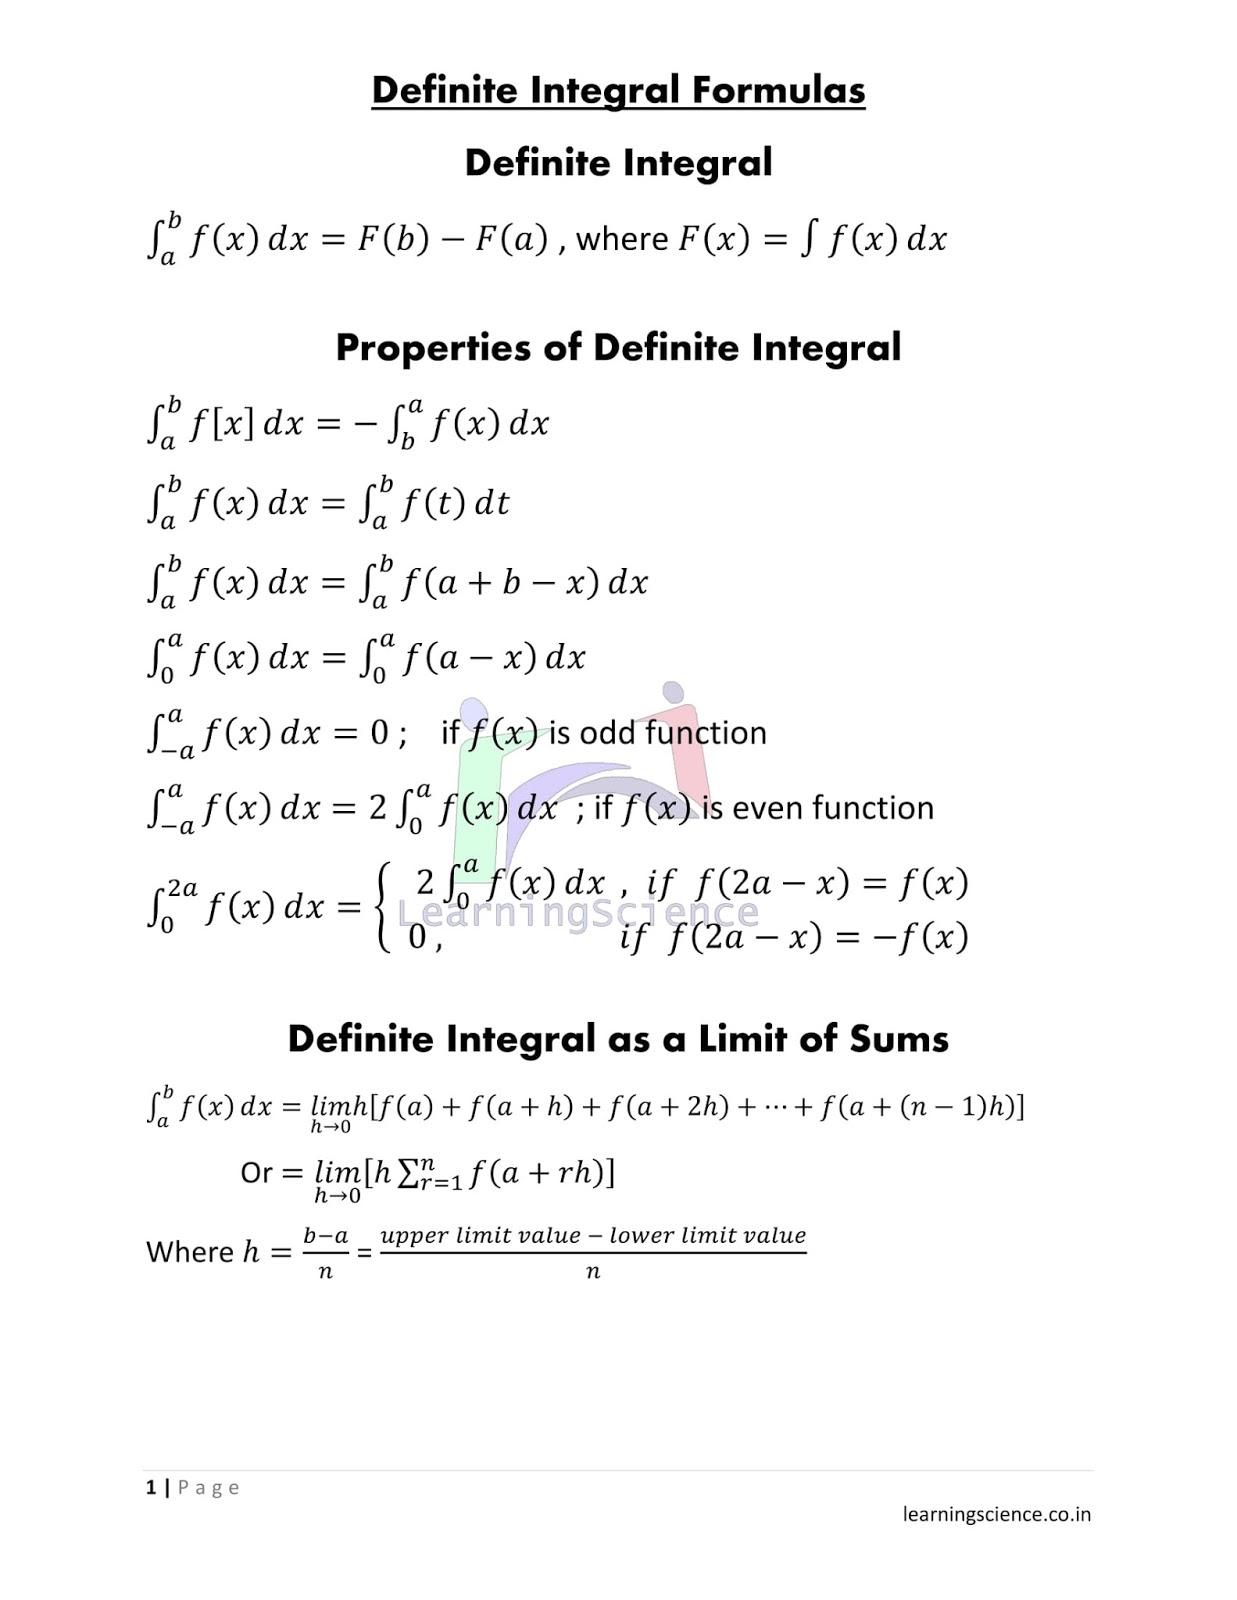 application of definite integrals pdf